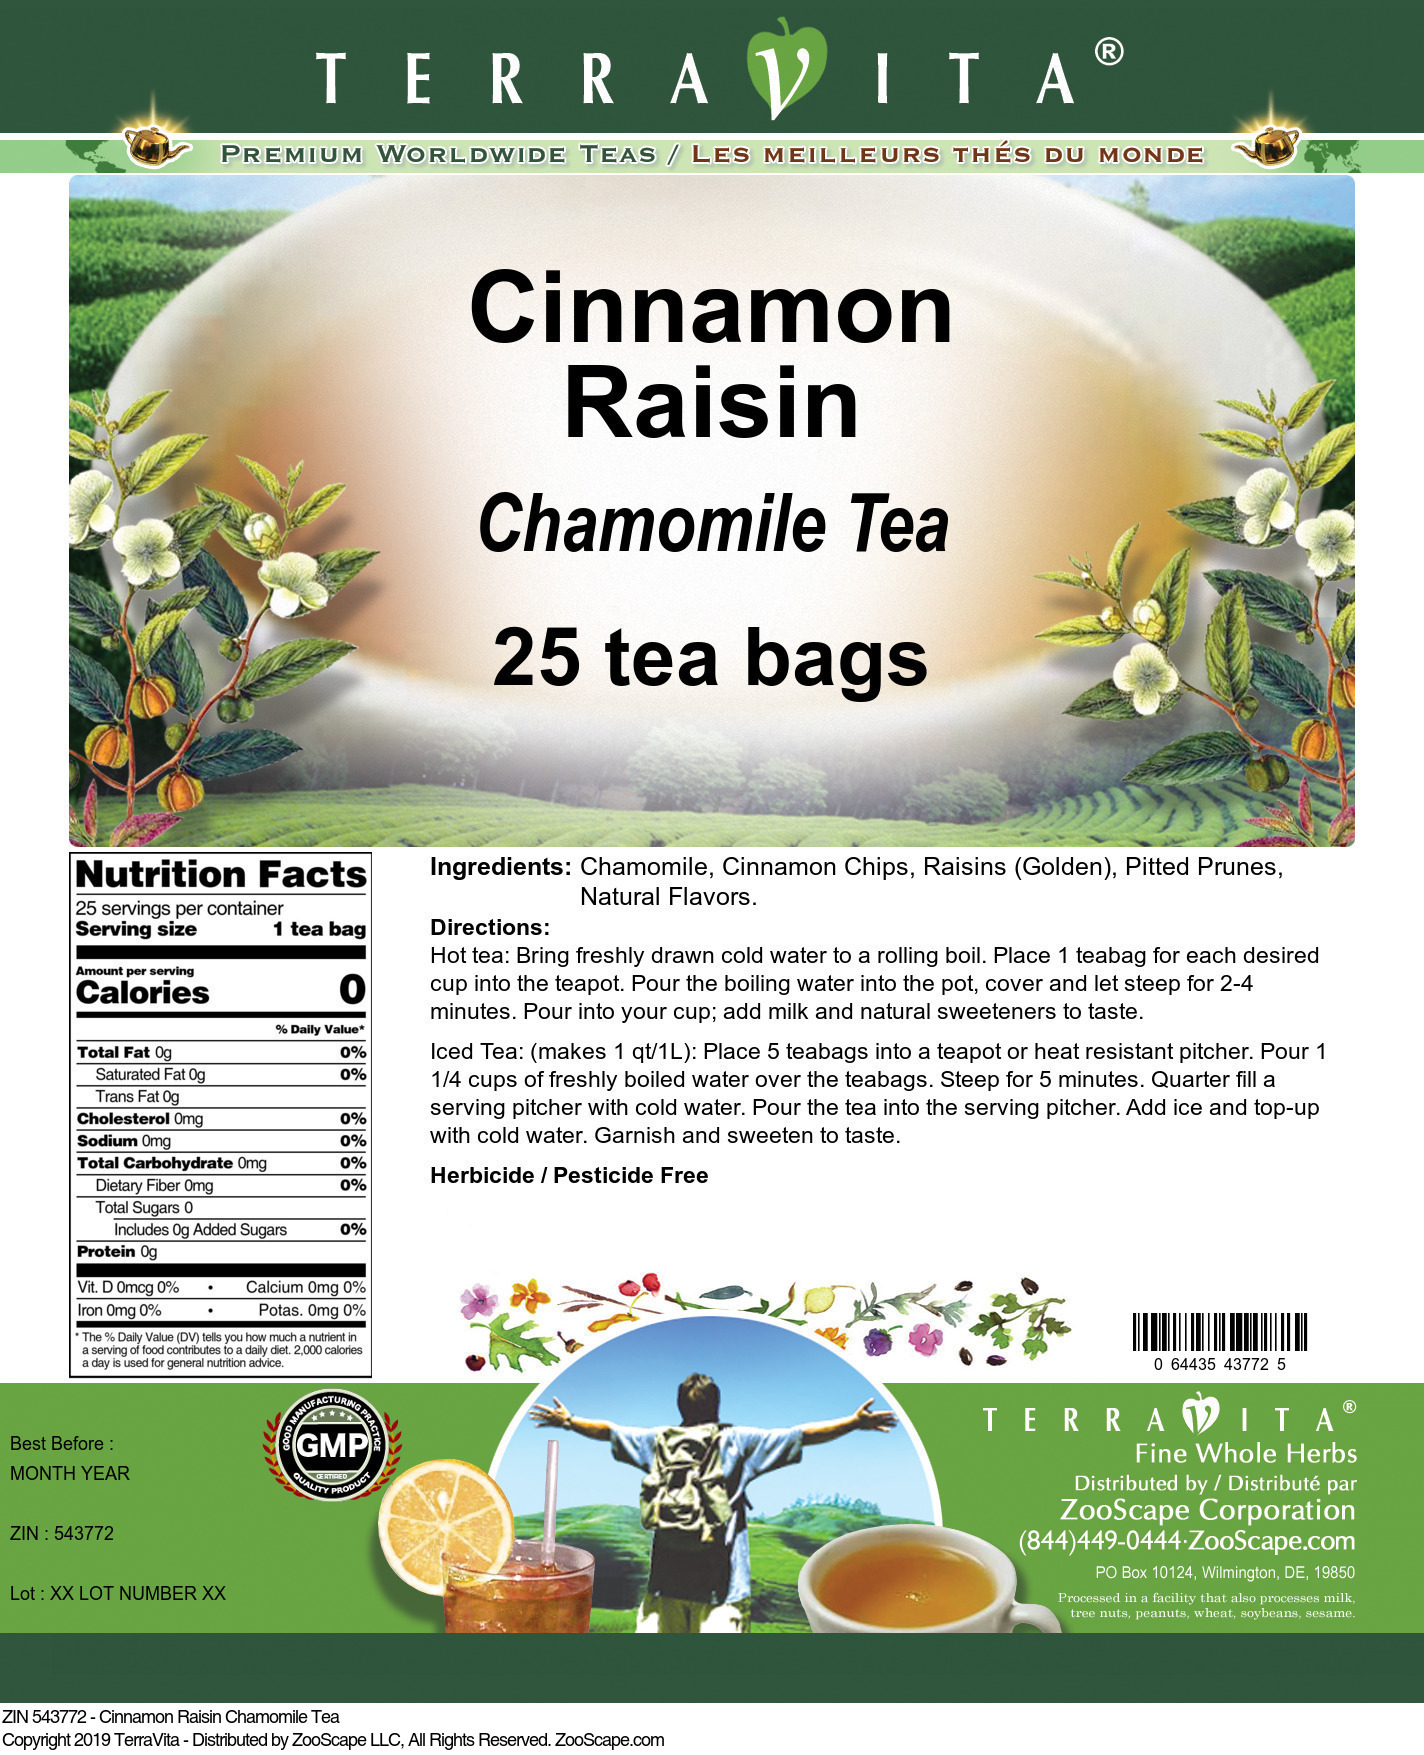 Cinnamon Raisin Chamomile Tea - Label